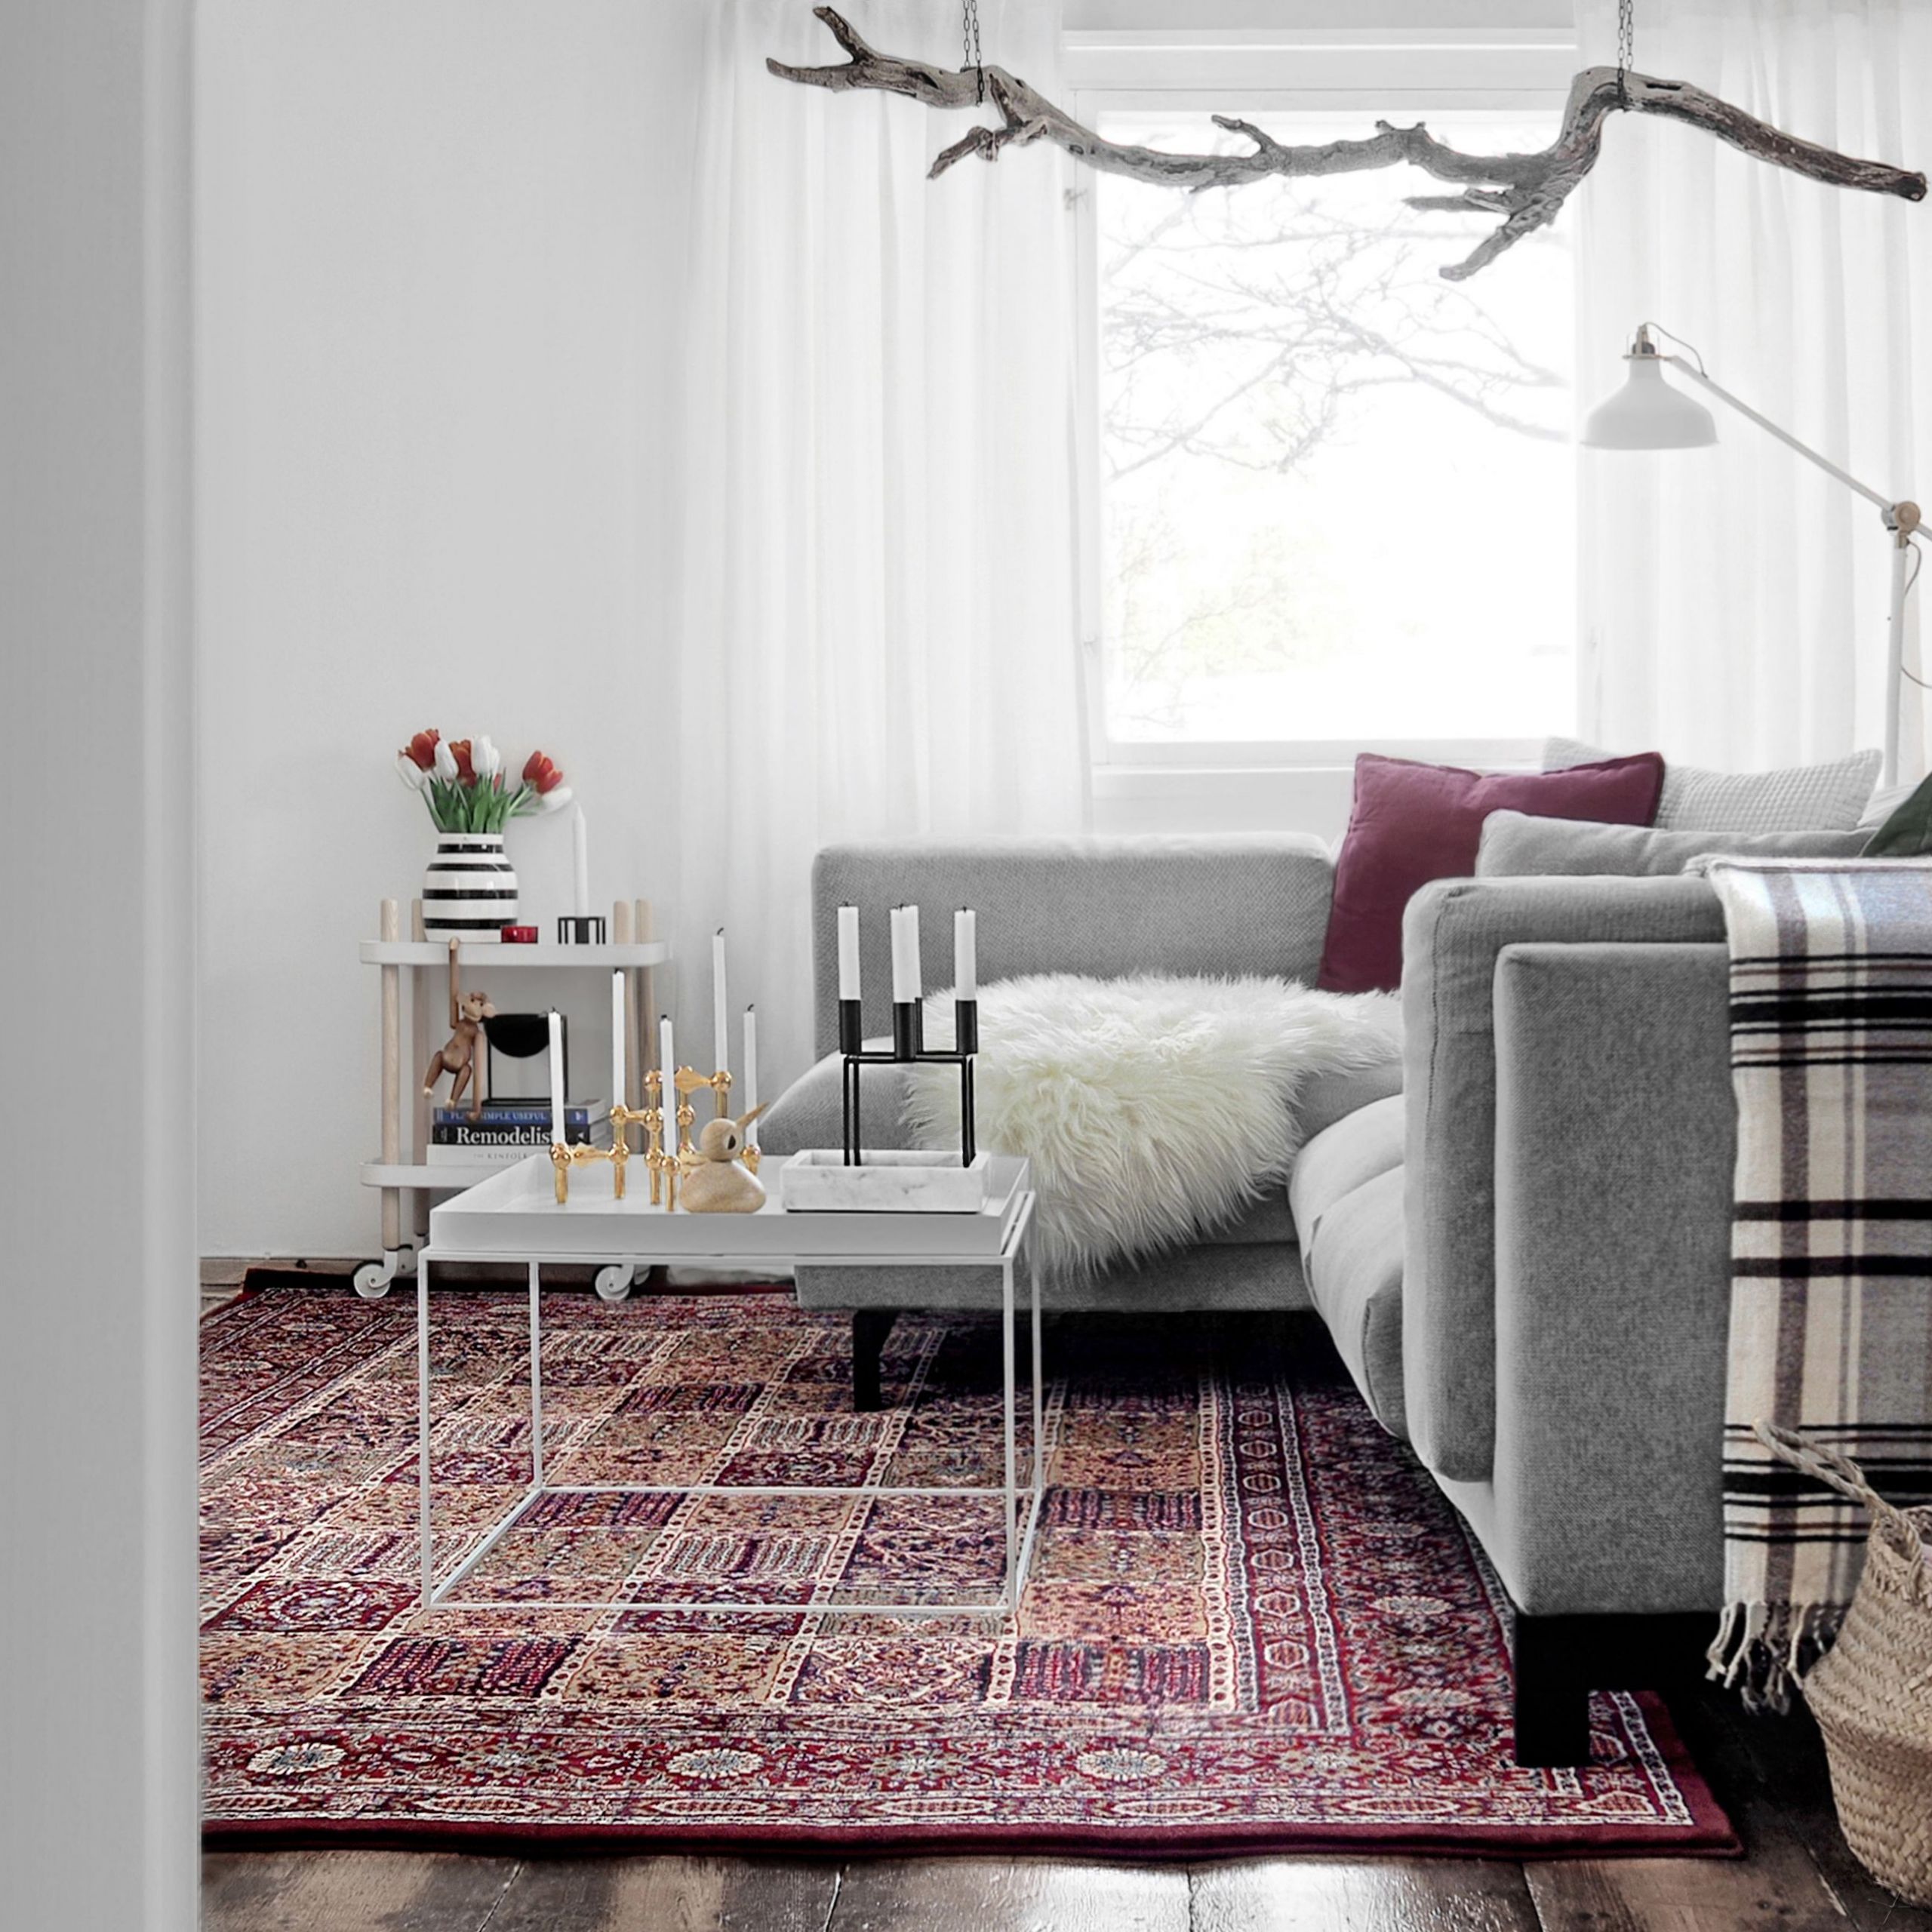 Ikea Living Room Rugs
 Our livingroom ️ The carpet is Ikea s Valby ruta